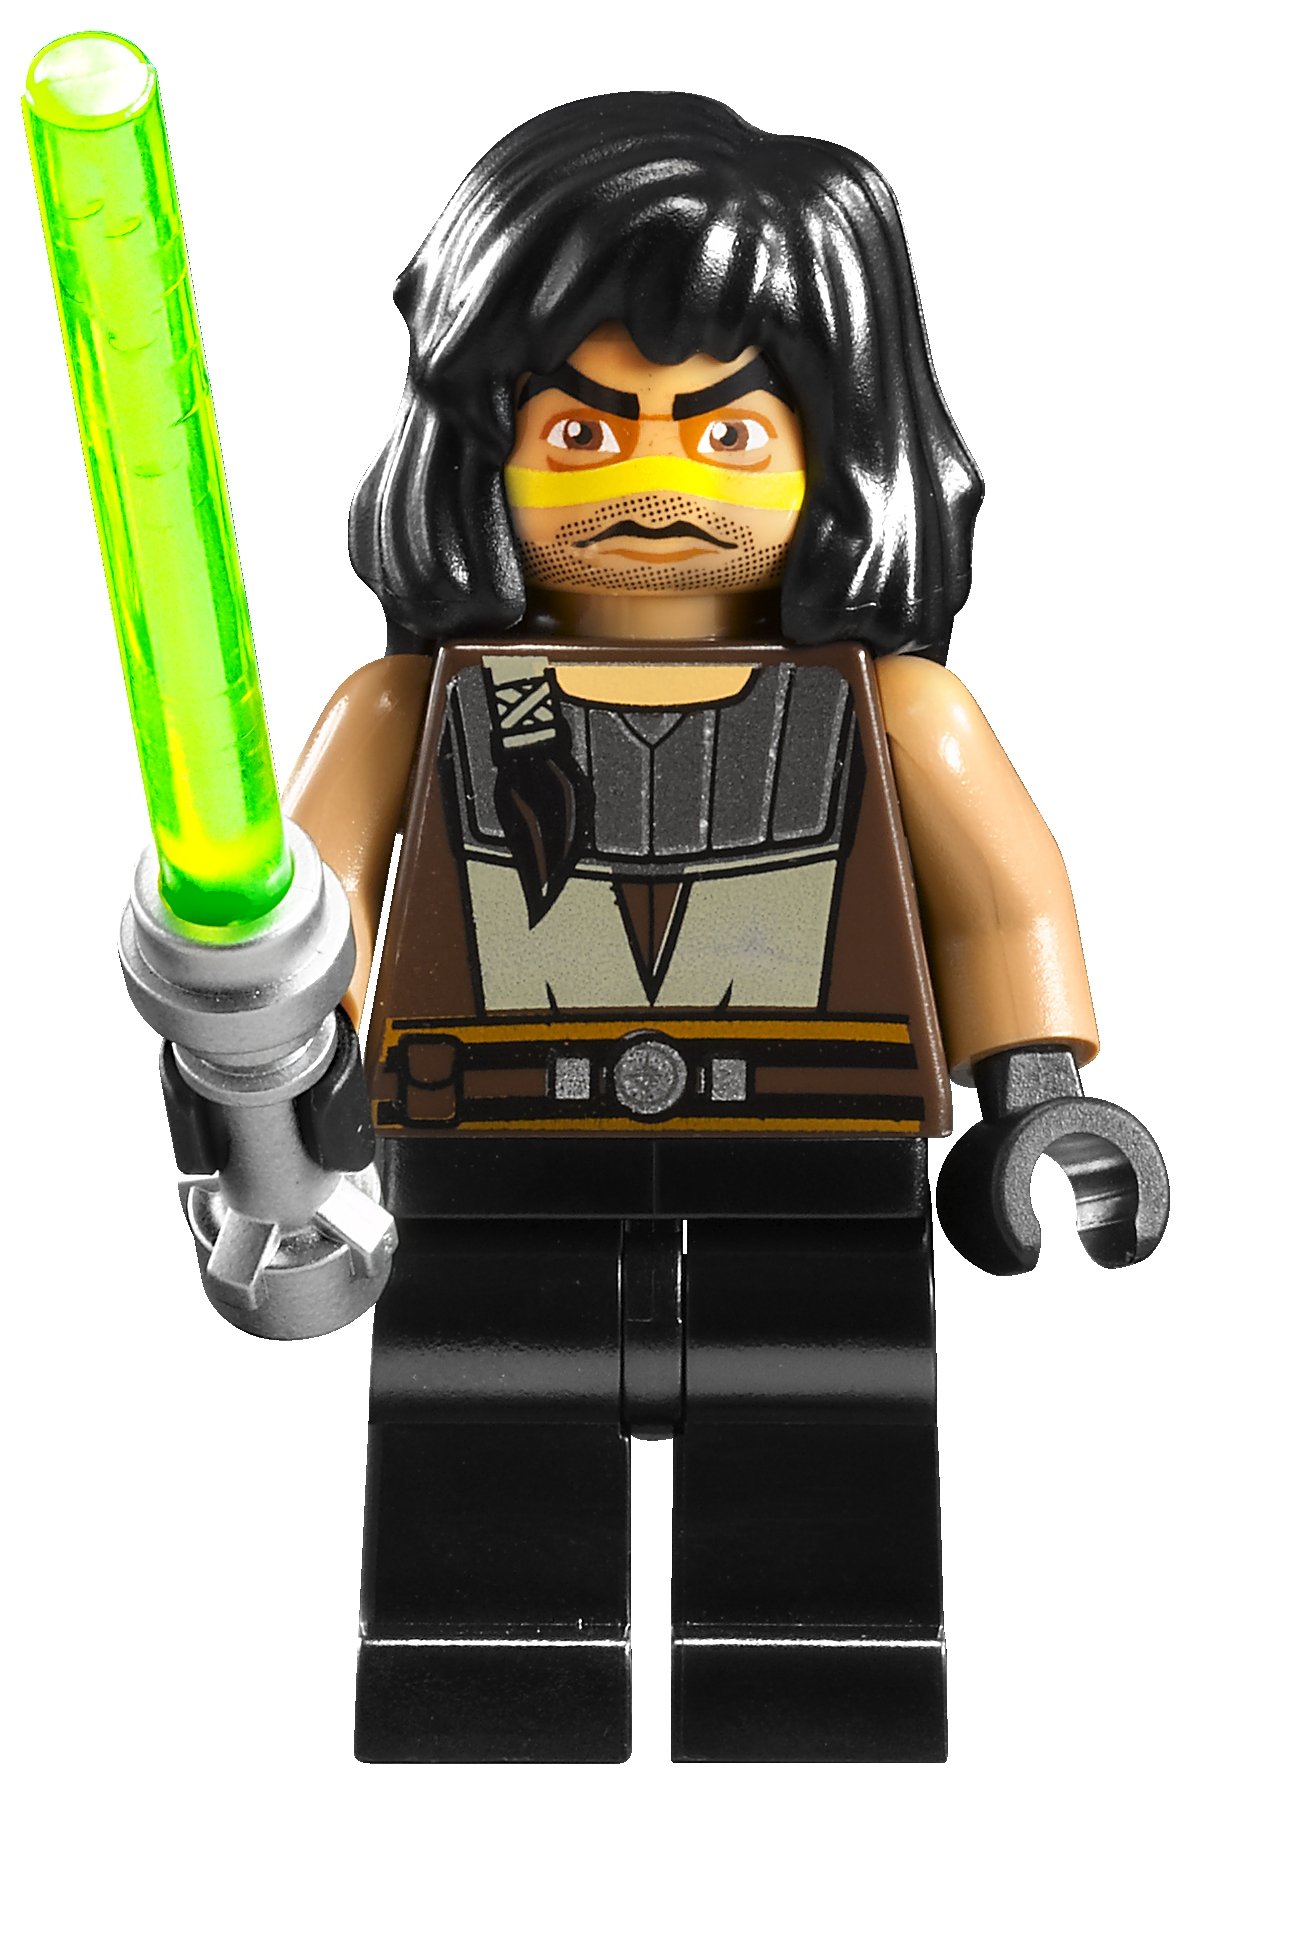 Lego Star Wars Republic Frigate 7964 - 2011 Release